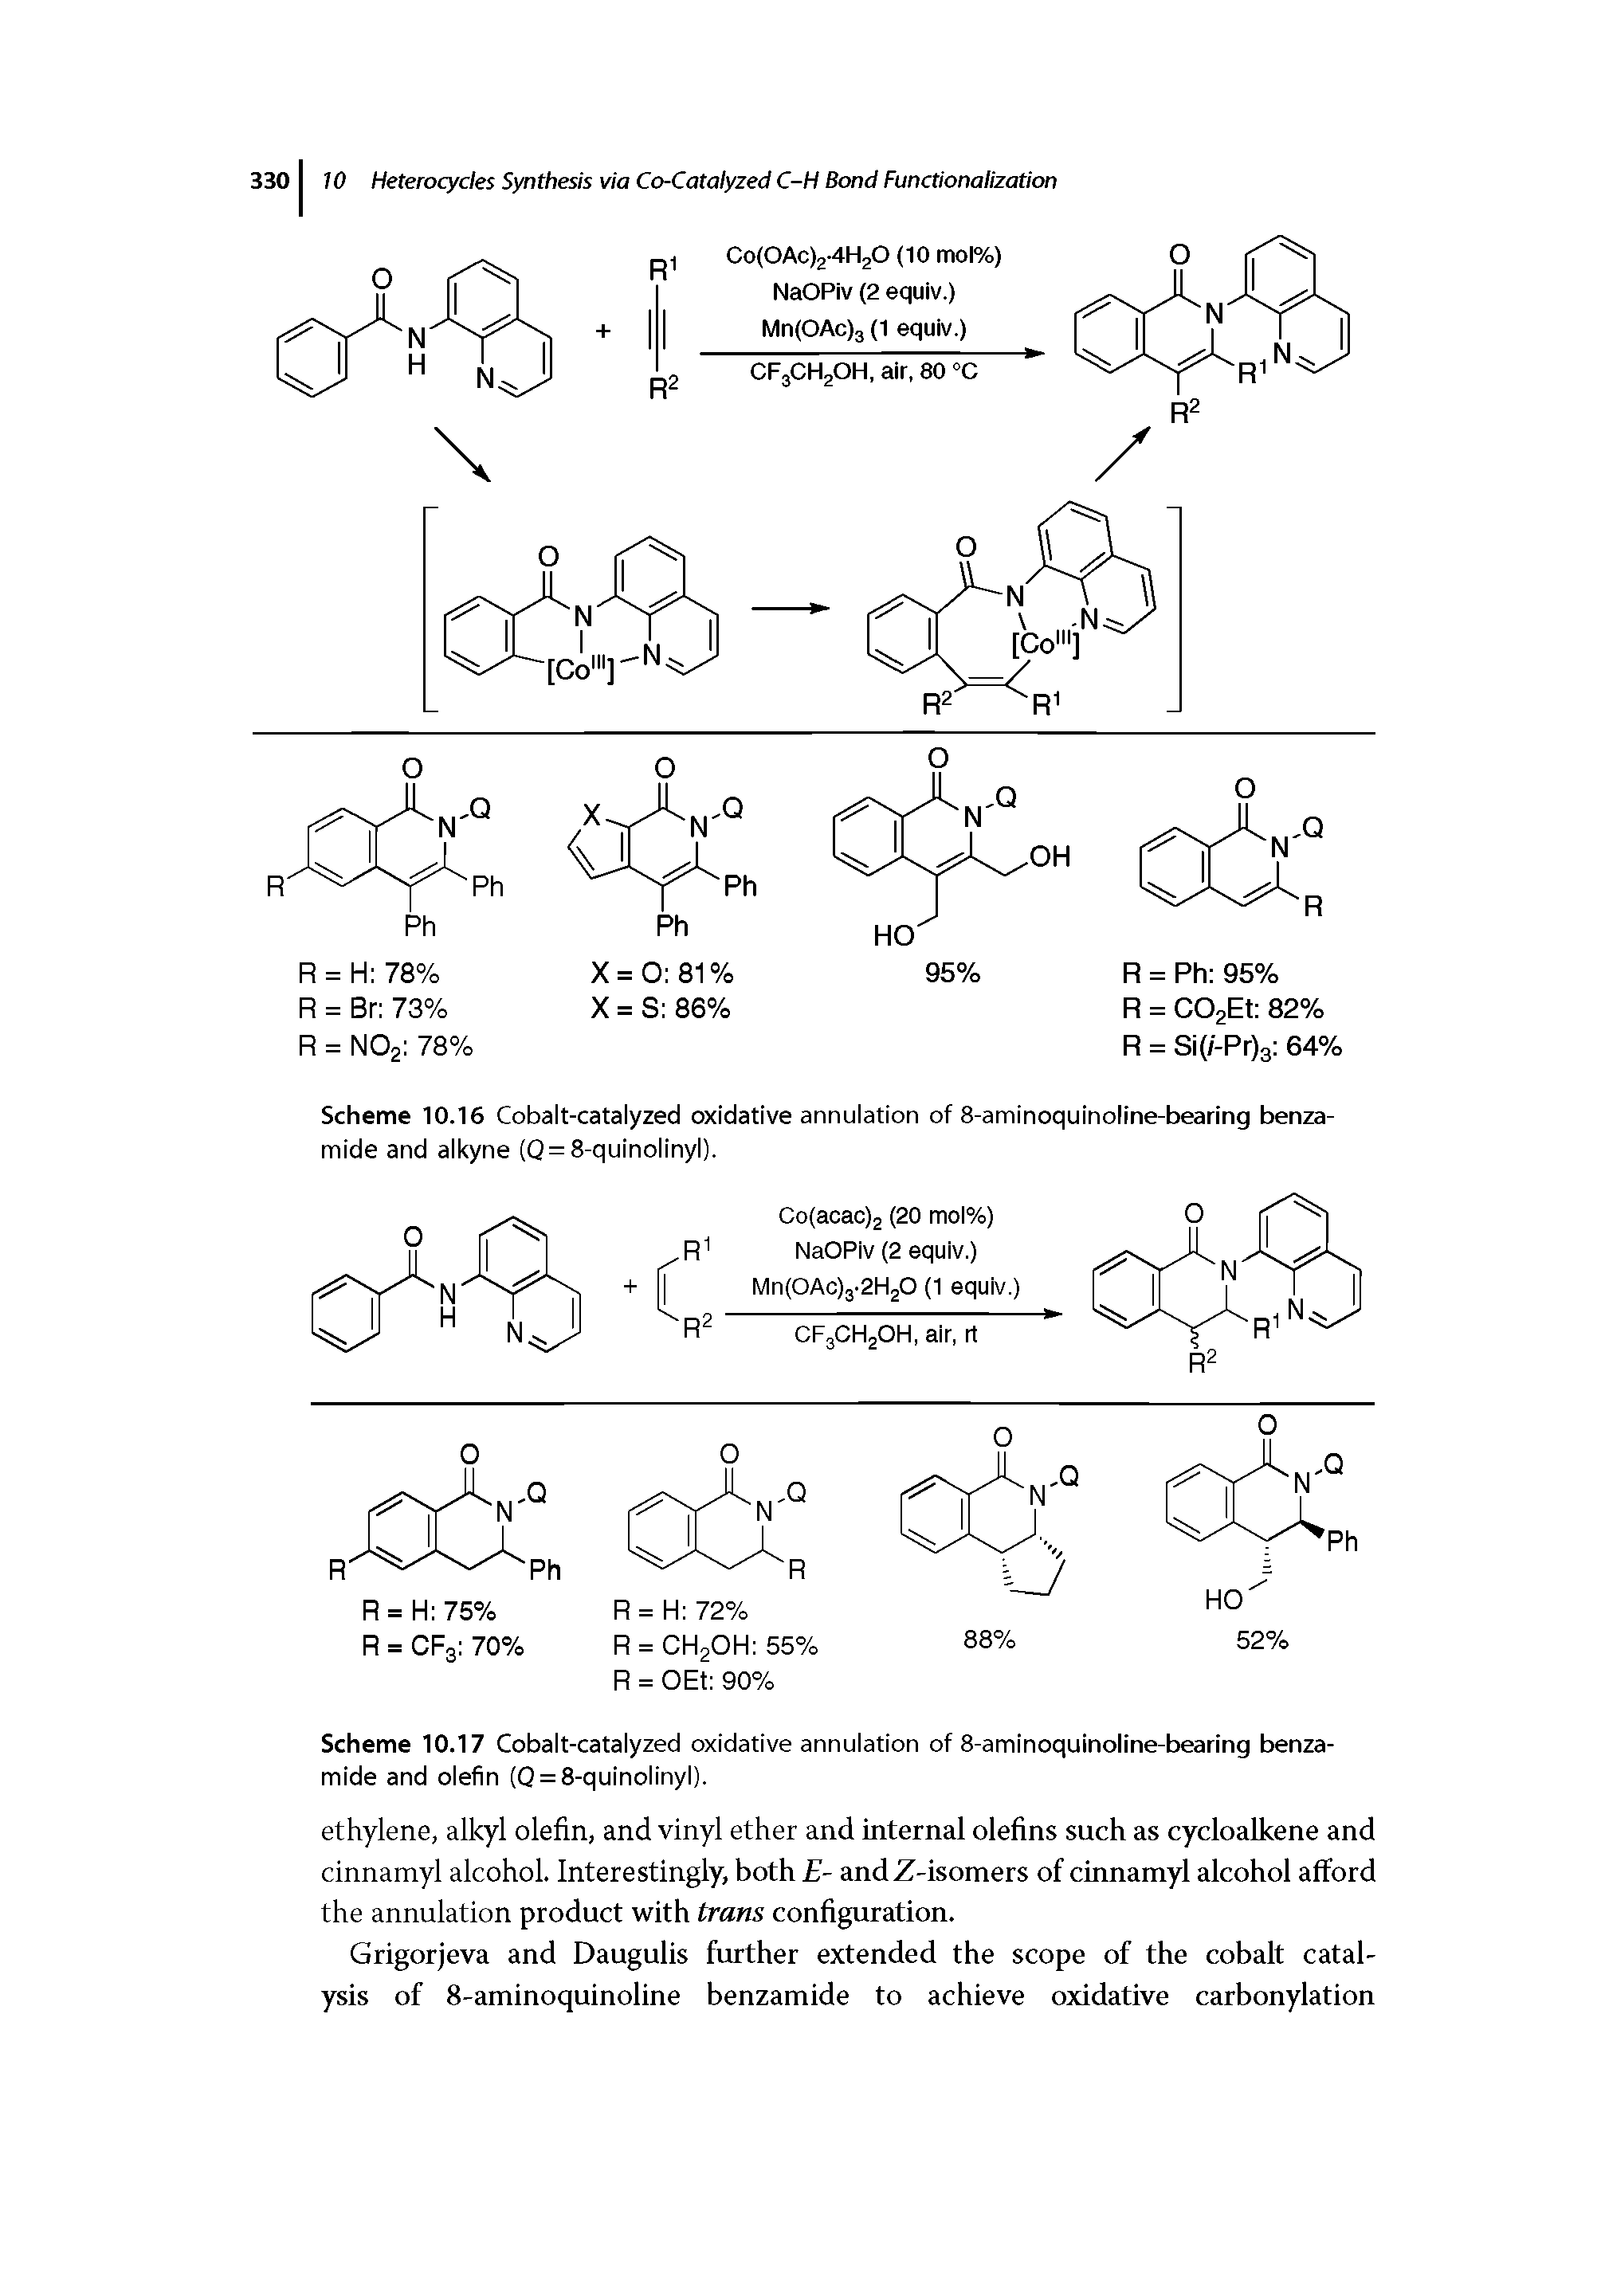 Scheme 10.16 Cobalt-catalyzed oxidative annulatlon of 8-amlnoquinoline-bearing benza-mlde and alkyne (Q = 8-qulnollnyl).